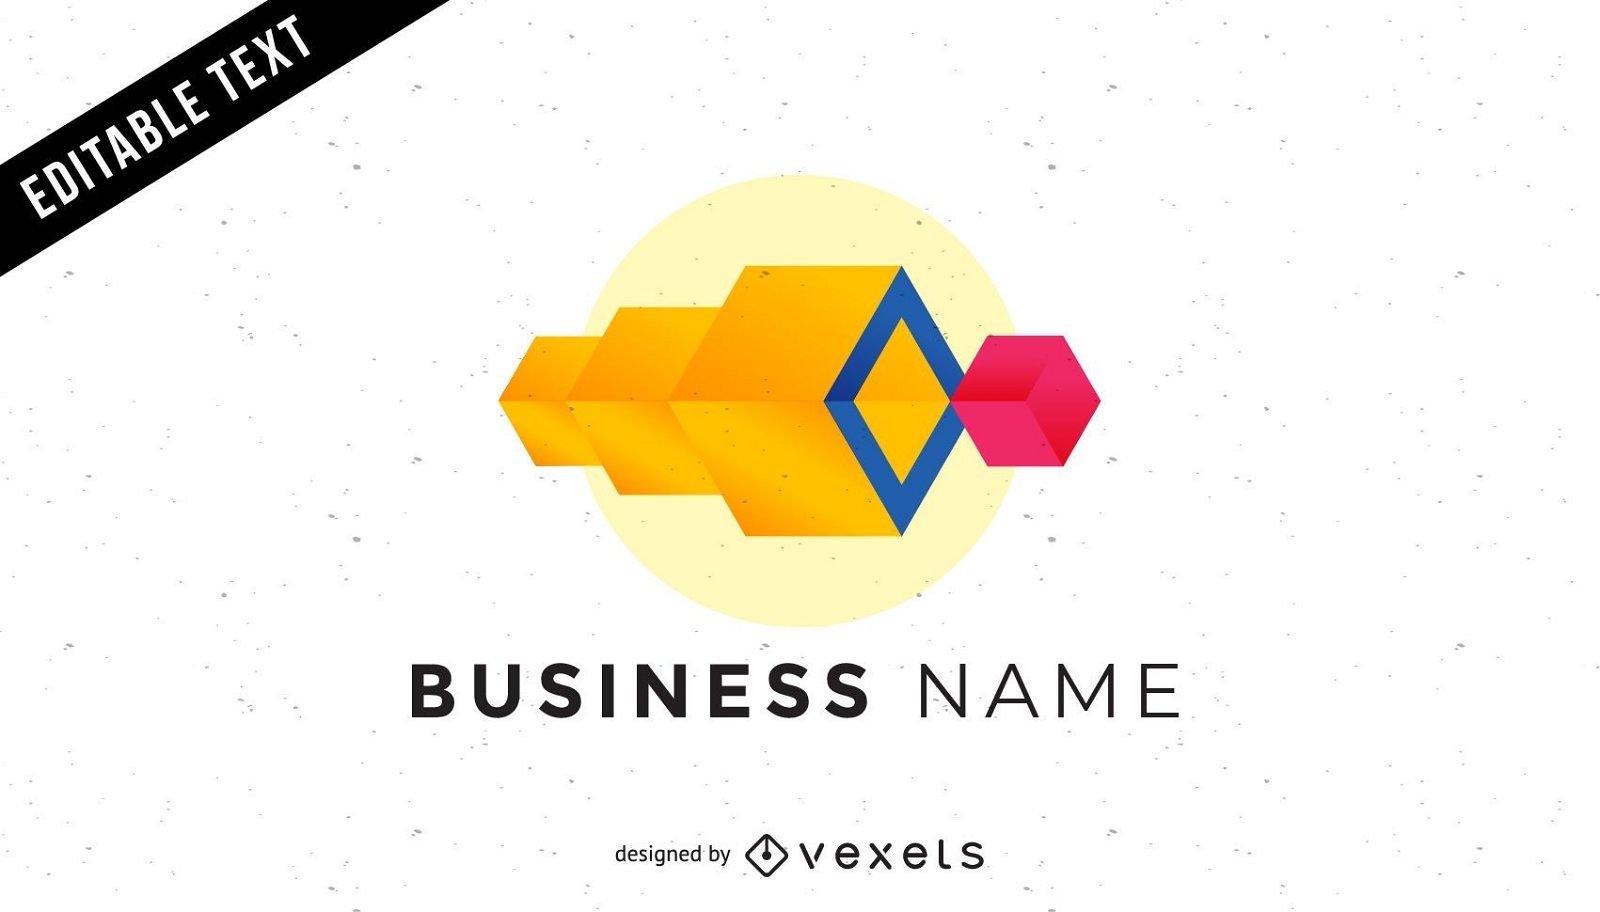 Cubes business logo